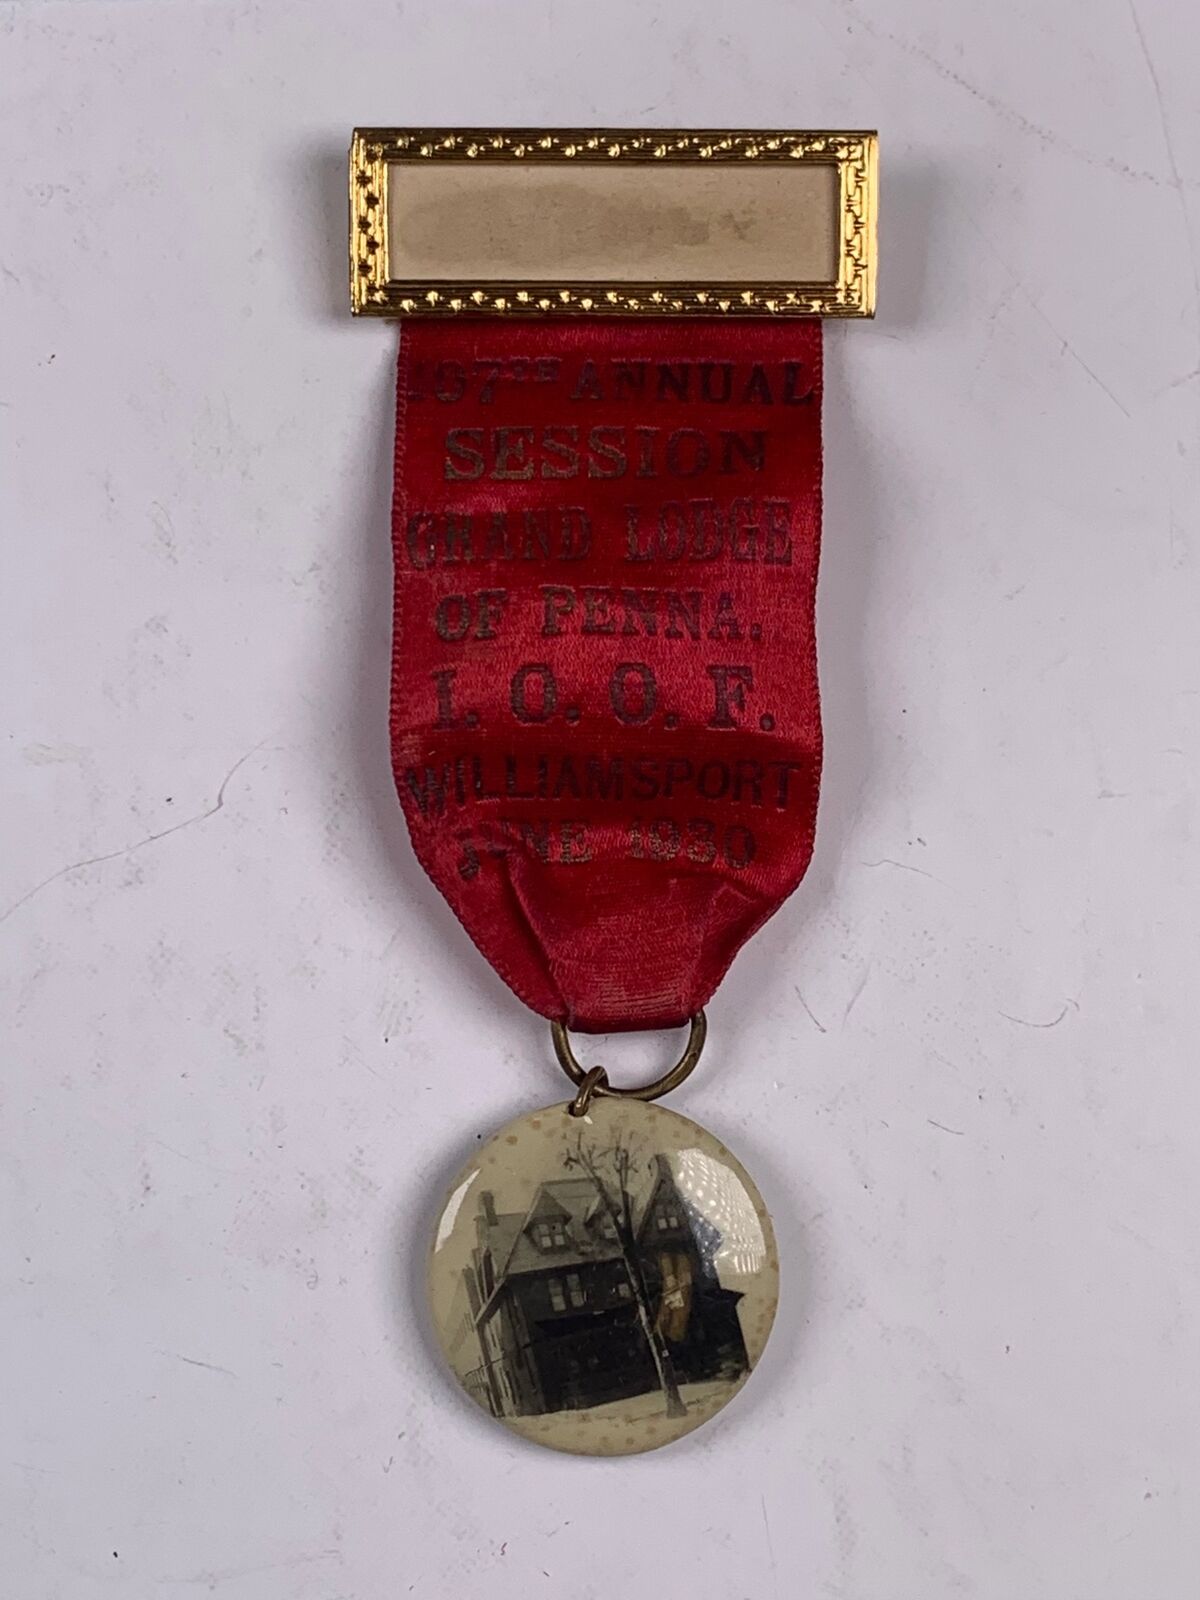 Masonic Medal Ribbon IOOF Williamsport PA 107th Session Grand Lodge 1930